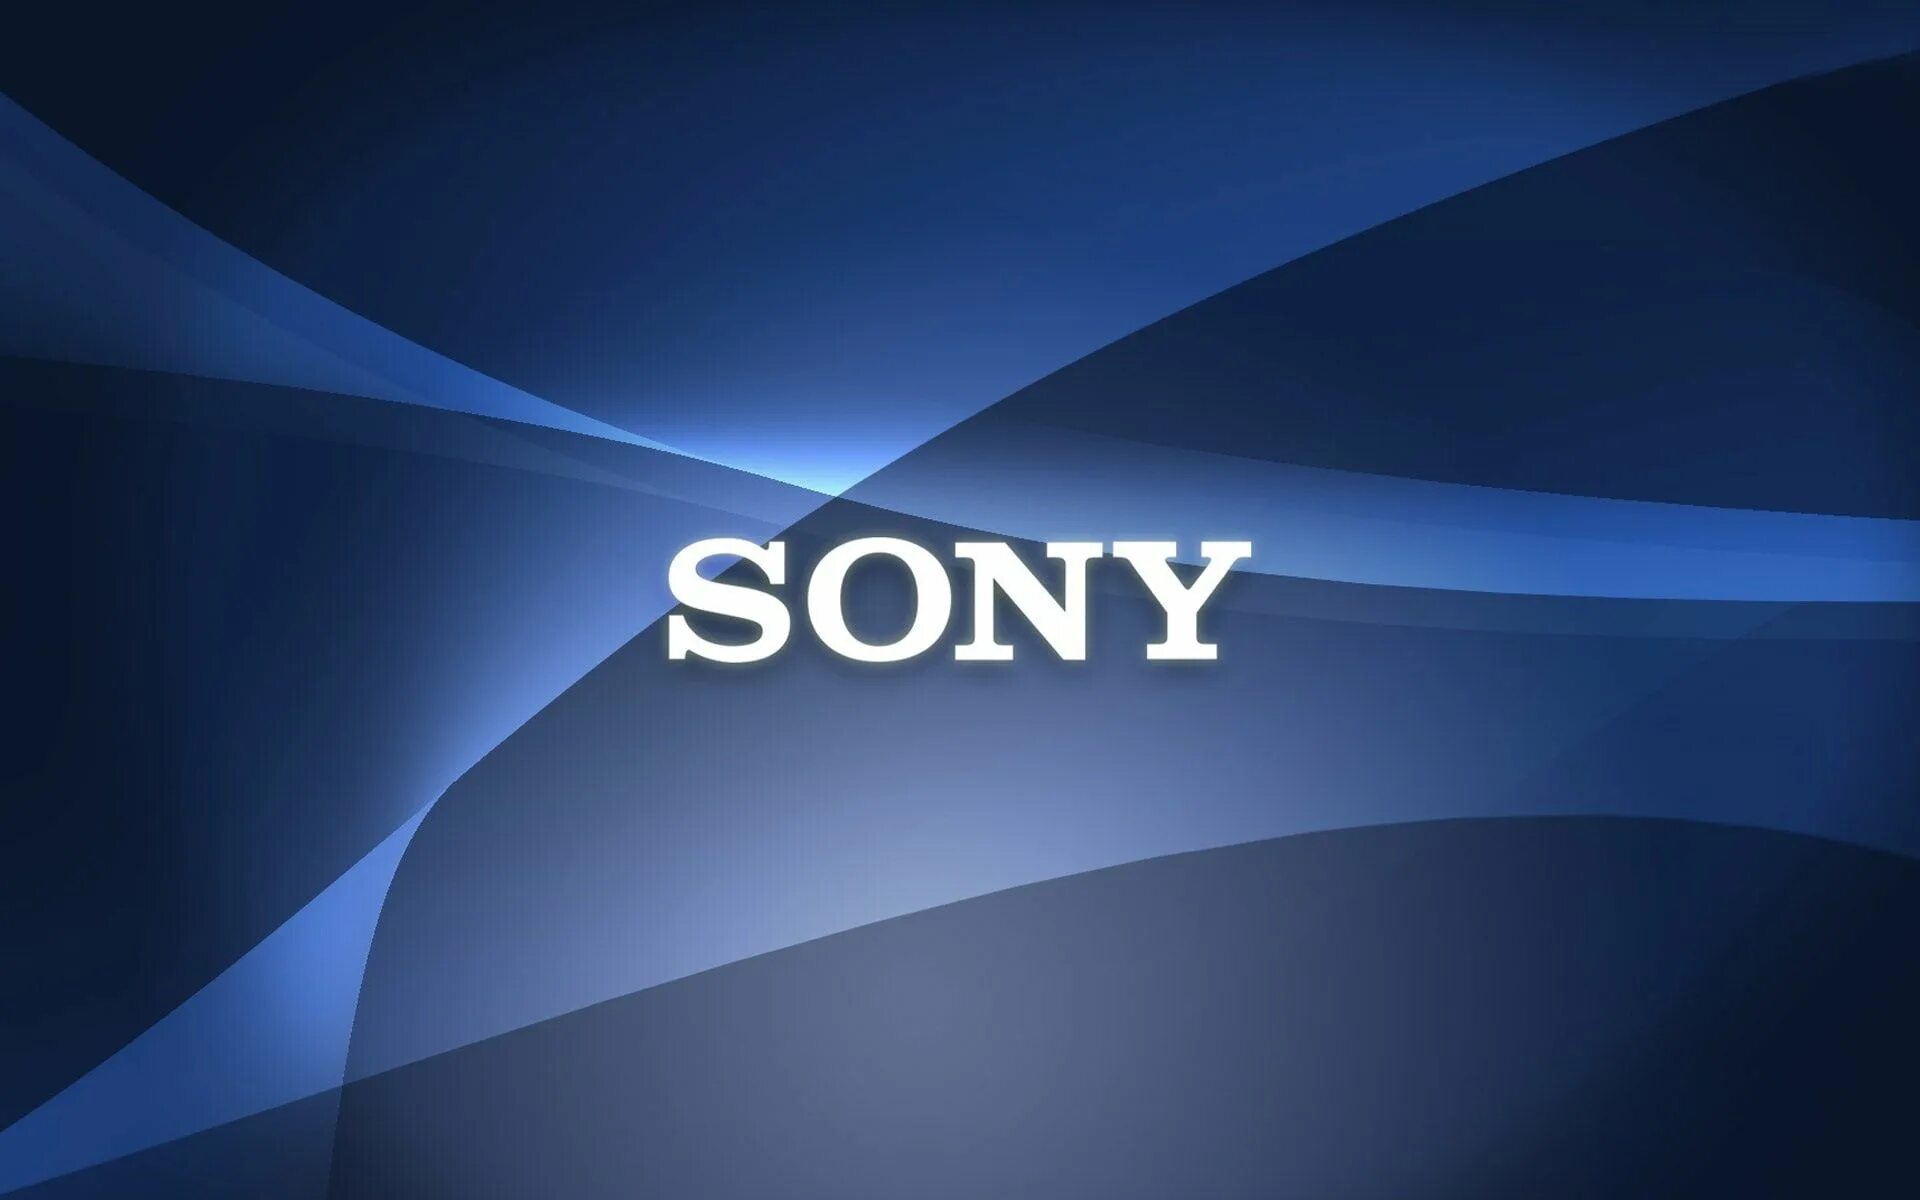 Sone053. Sony фирма. Sony эмблема. Компания Sony логотип. Заставка Sony.